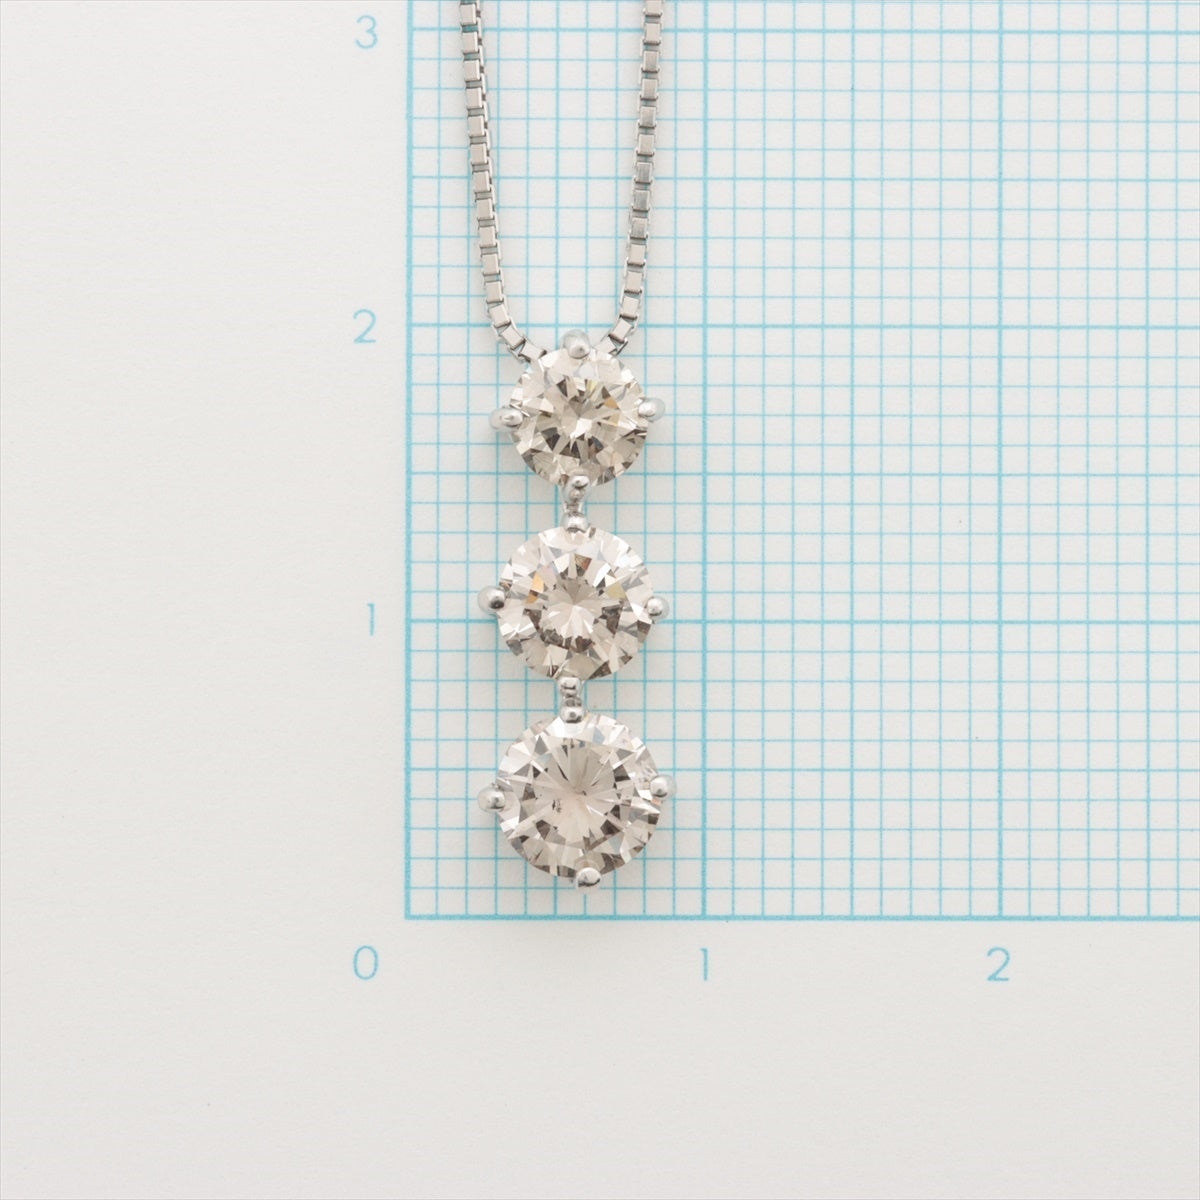 Diamond necklace Pt900 x Pt850 4.0g 1.50